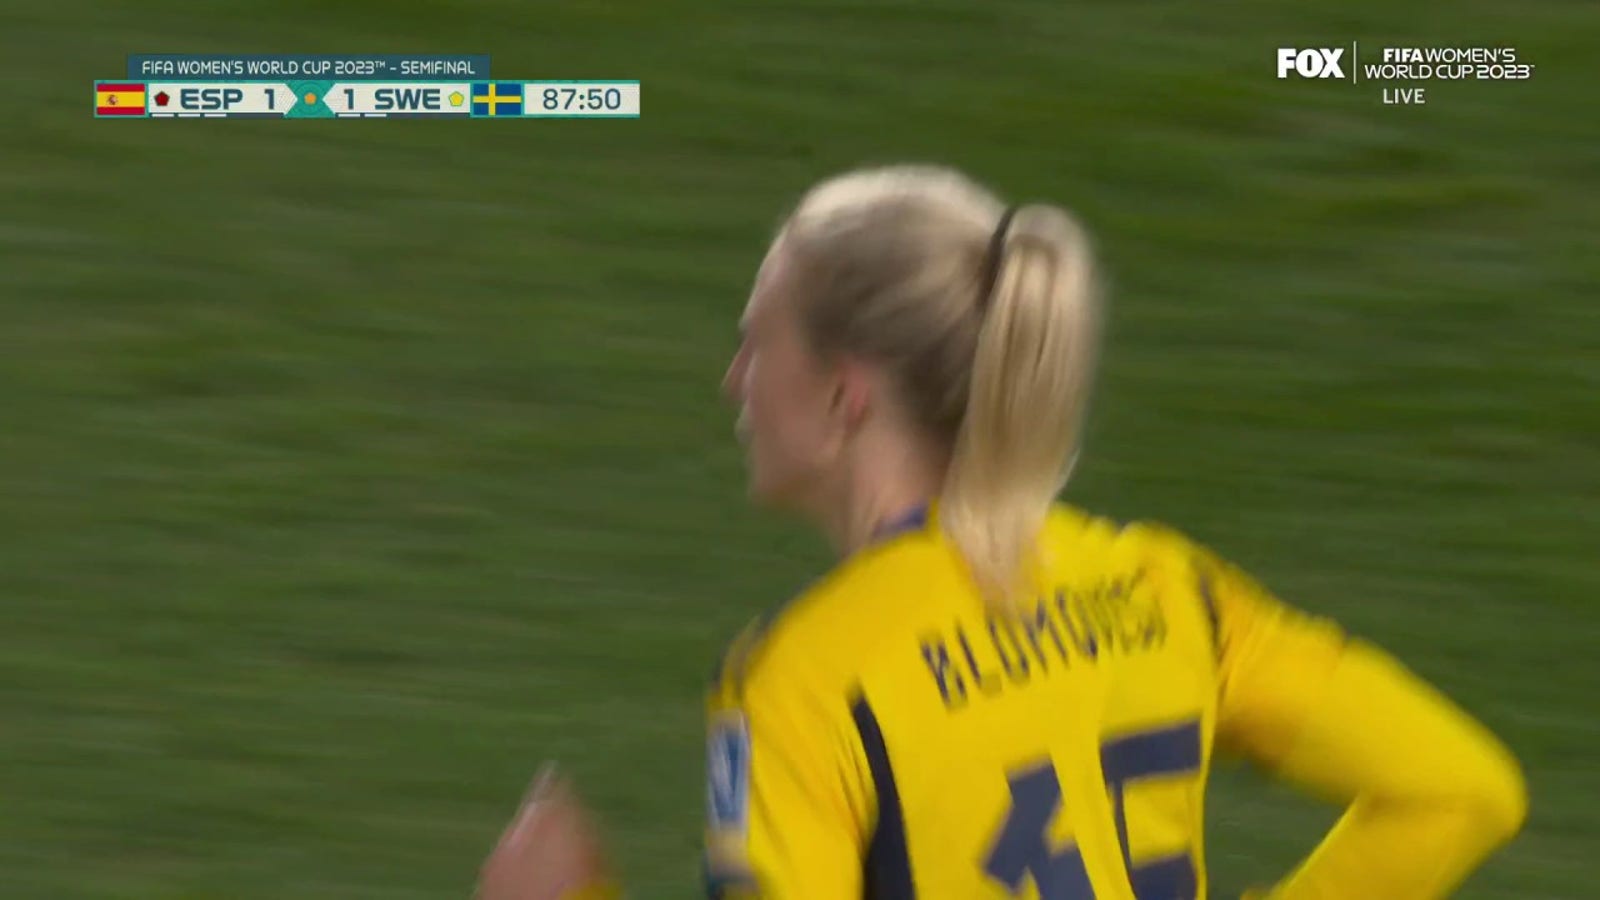 Sweden's Rebecka Blomqvist scores goal vs. Spain in 88' | 2023 FIFA Women's World Cup